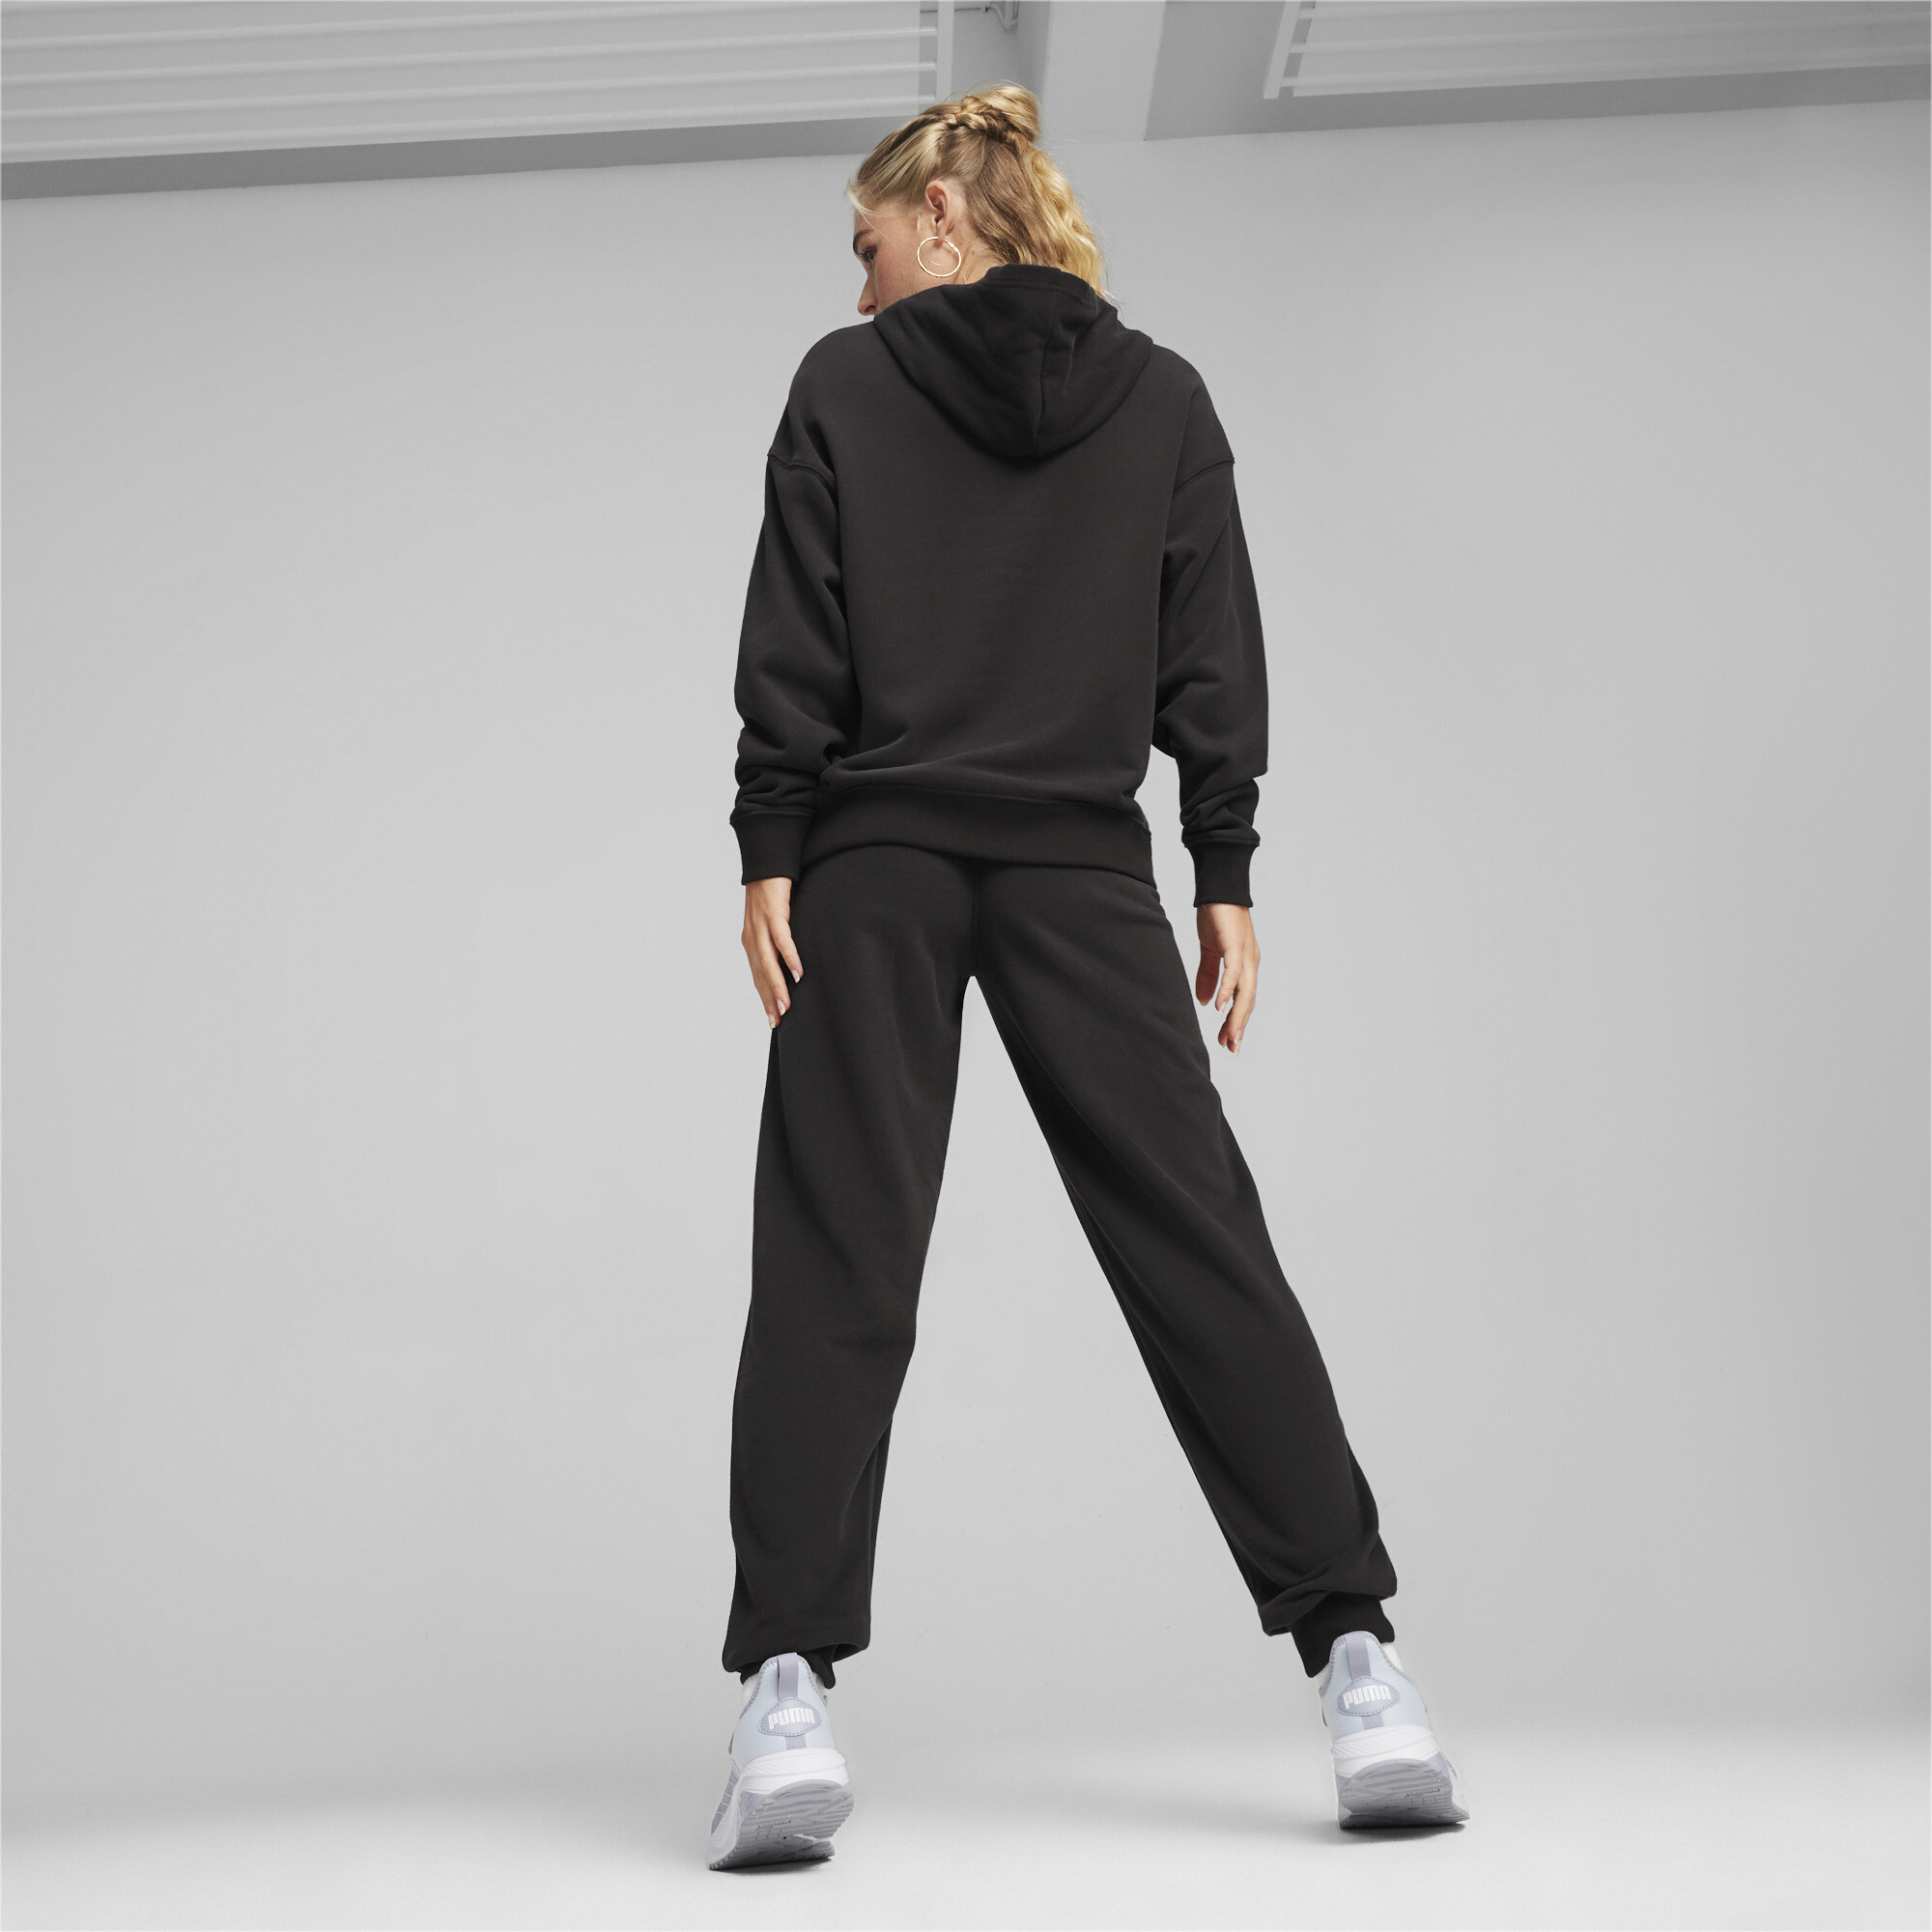 Women's Puma Loungewear's Track Suit, Black, Size XS, Clothing